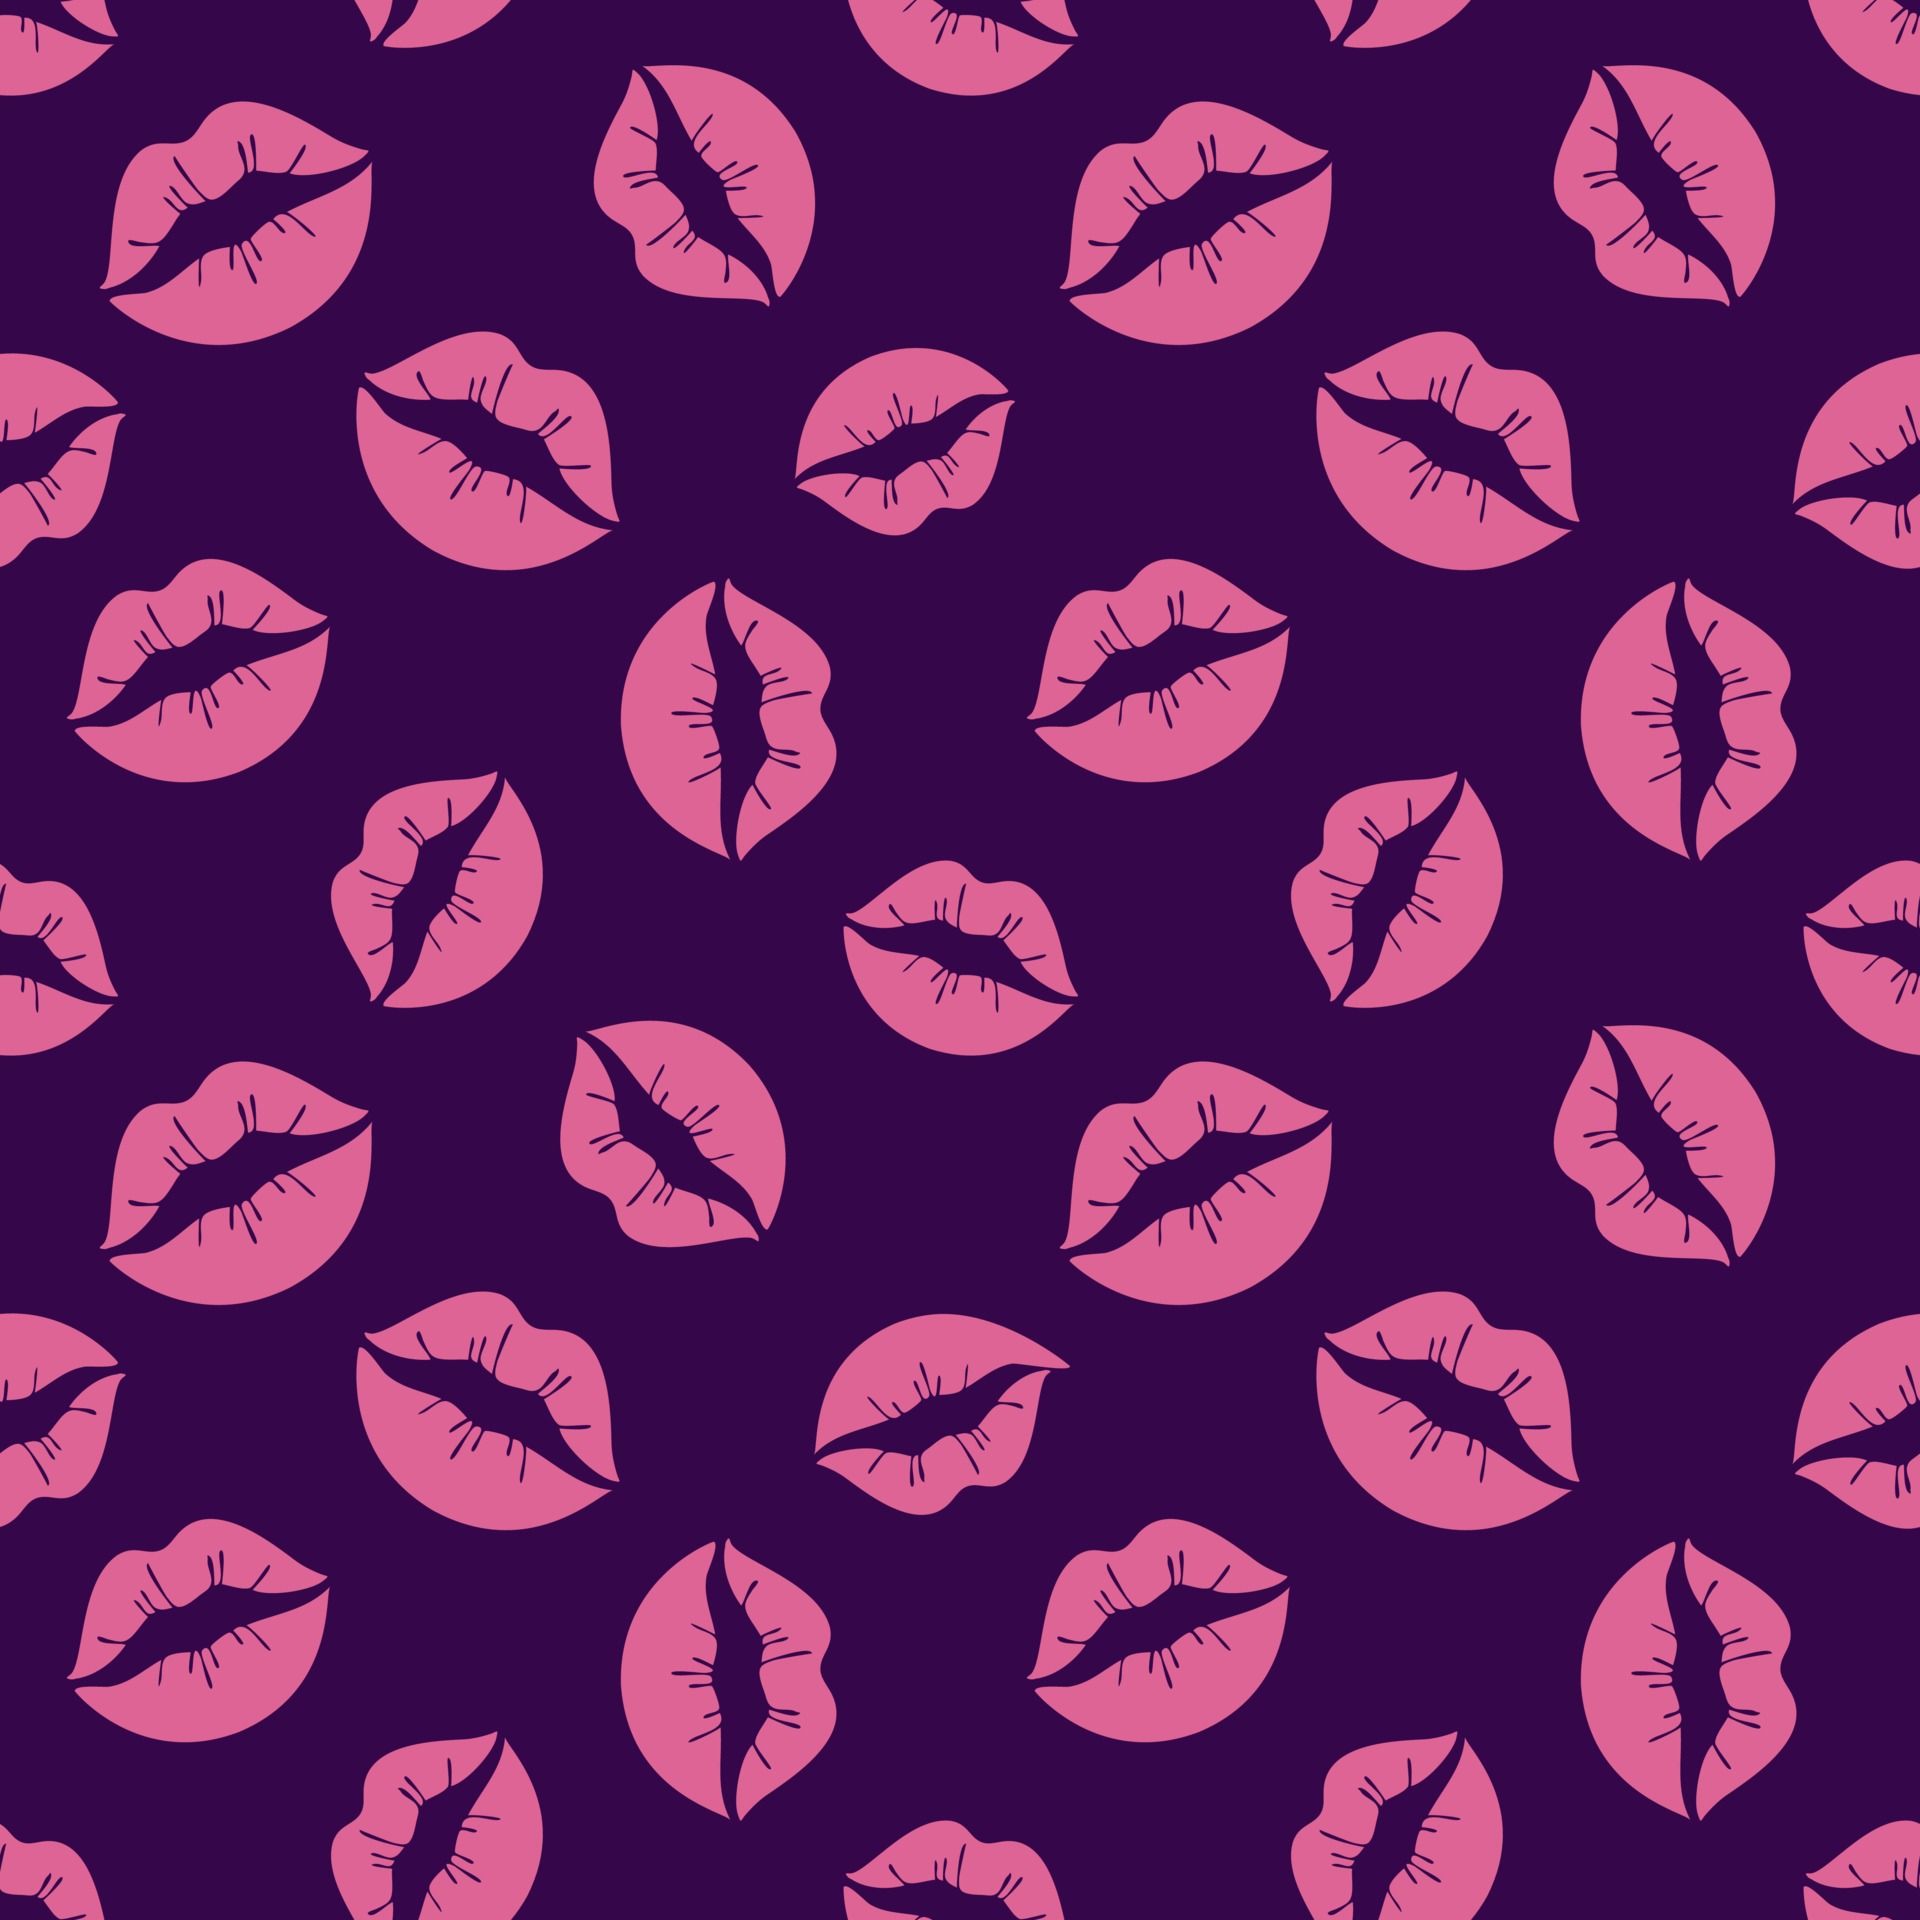 Pattern of pink lips on a purple background - Lips